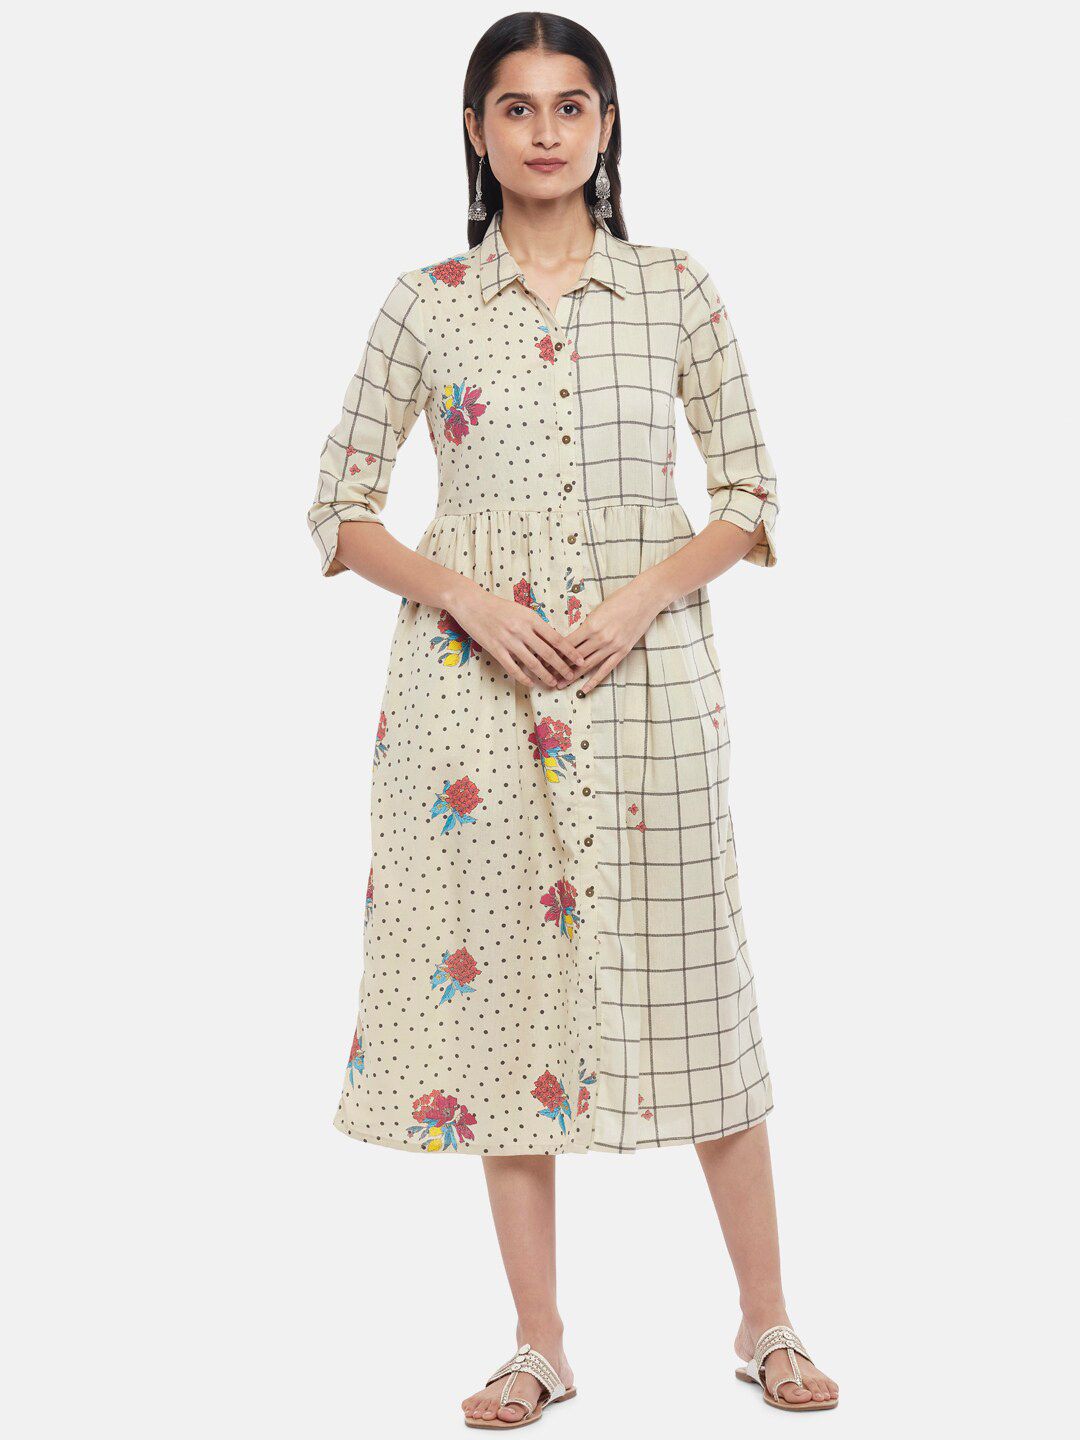 AKKRITI BY PANTALOONS Off White Shirt Midi Dress Price in India